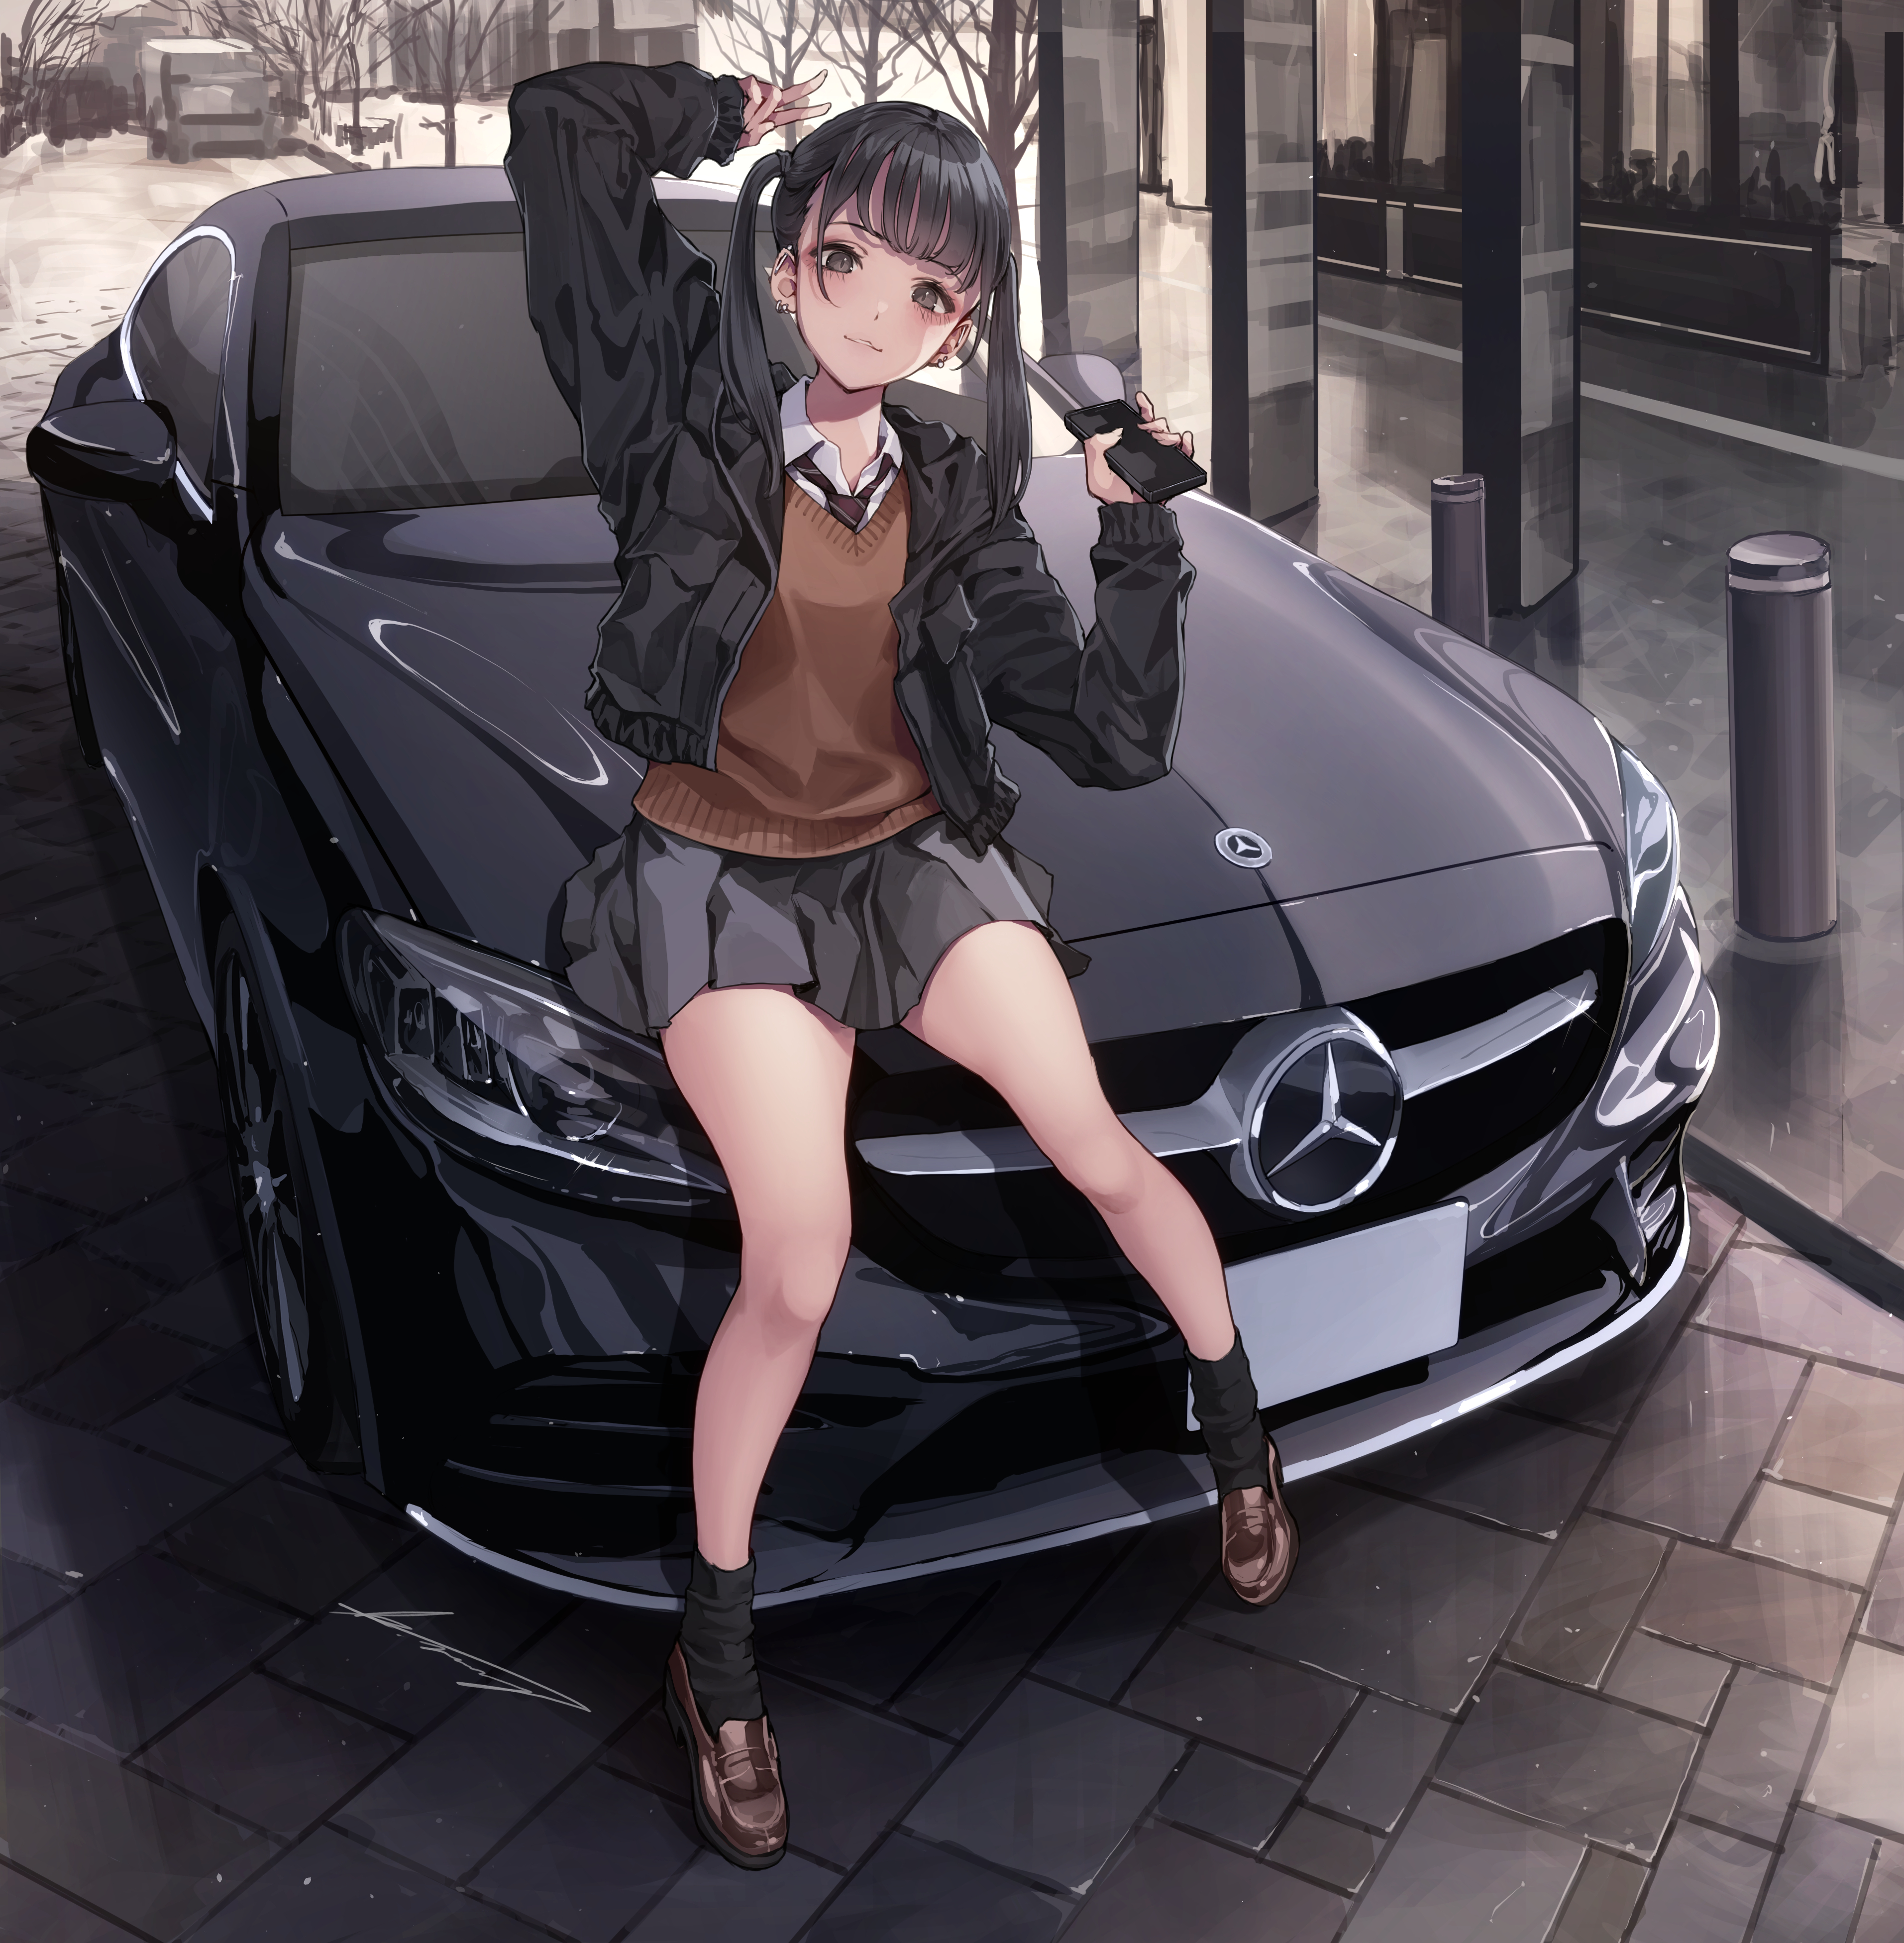 Anime 3826x3904 anime girls Mercedes-Benz school uniform car artwork koh